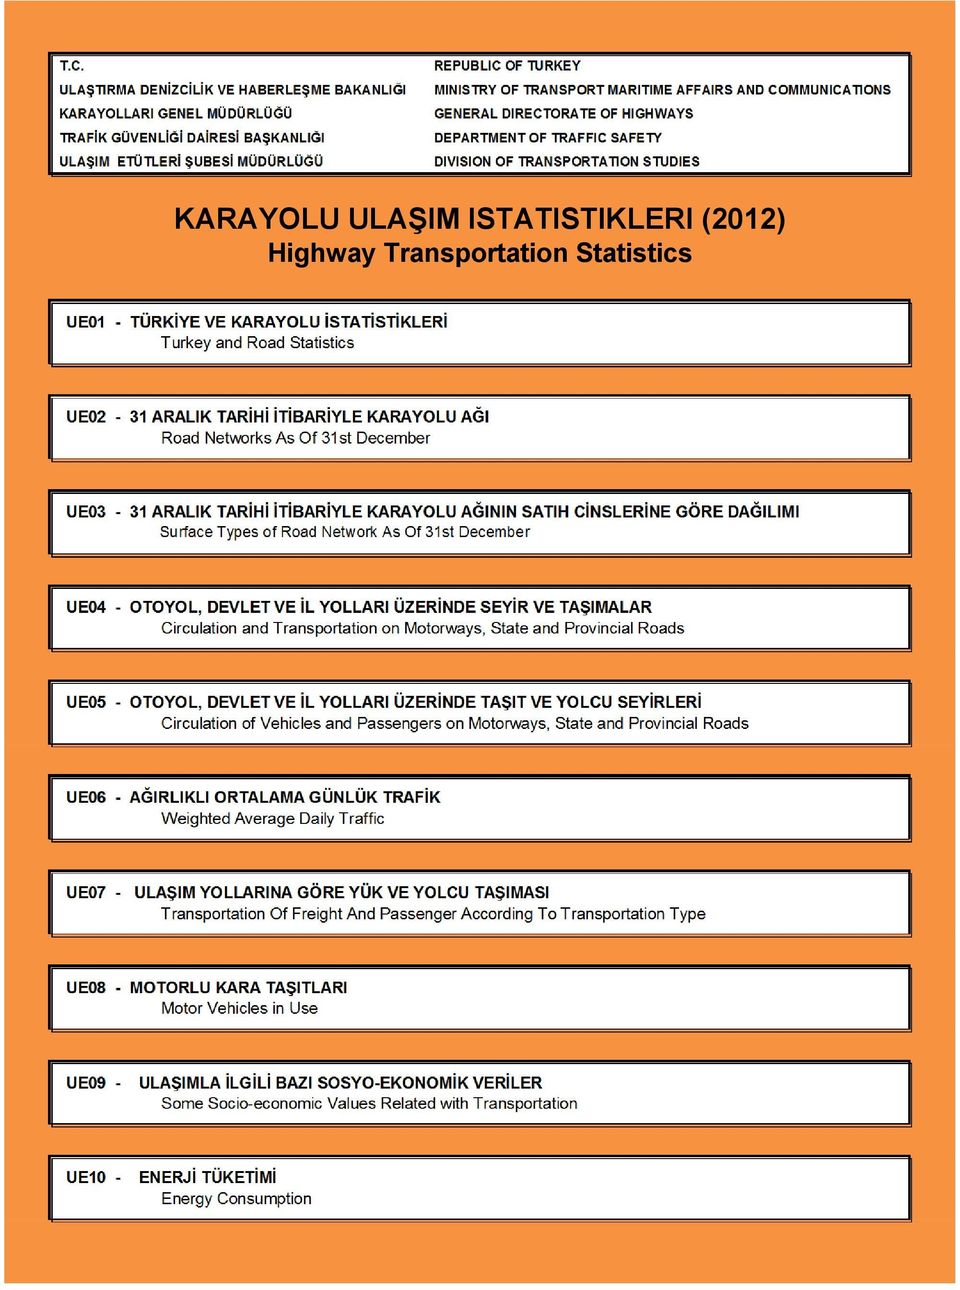 TÜRKİYE VE KARAYOLU İSTATİSTİKLERİ Turkey and Road Statistics UE2-31 ARALIK TARİHİ İTİBARİYLE KARAYOLU AĞI Road Networks As Of 31st December UE3-31 ARALIK TARİHİ İTİBARİYLE KARAYOLU AĞININ SATIH